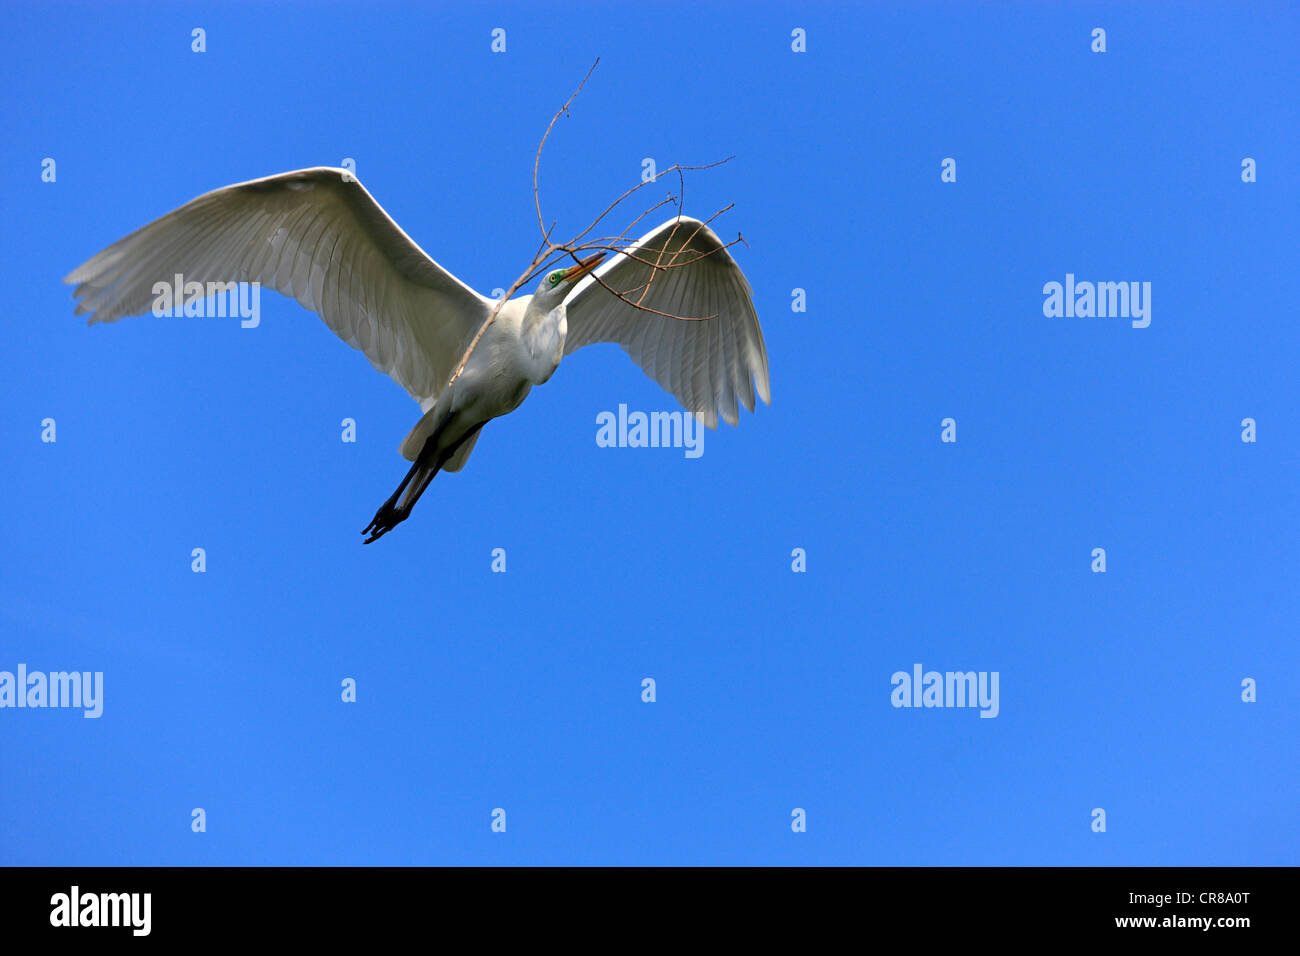 Great White Egret (Egretta alba), adult, flying with nesting material, Florida, USA, America Stock Photo